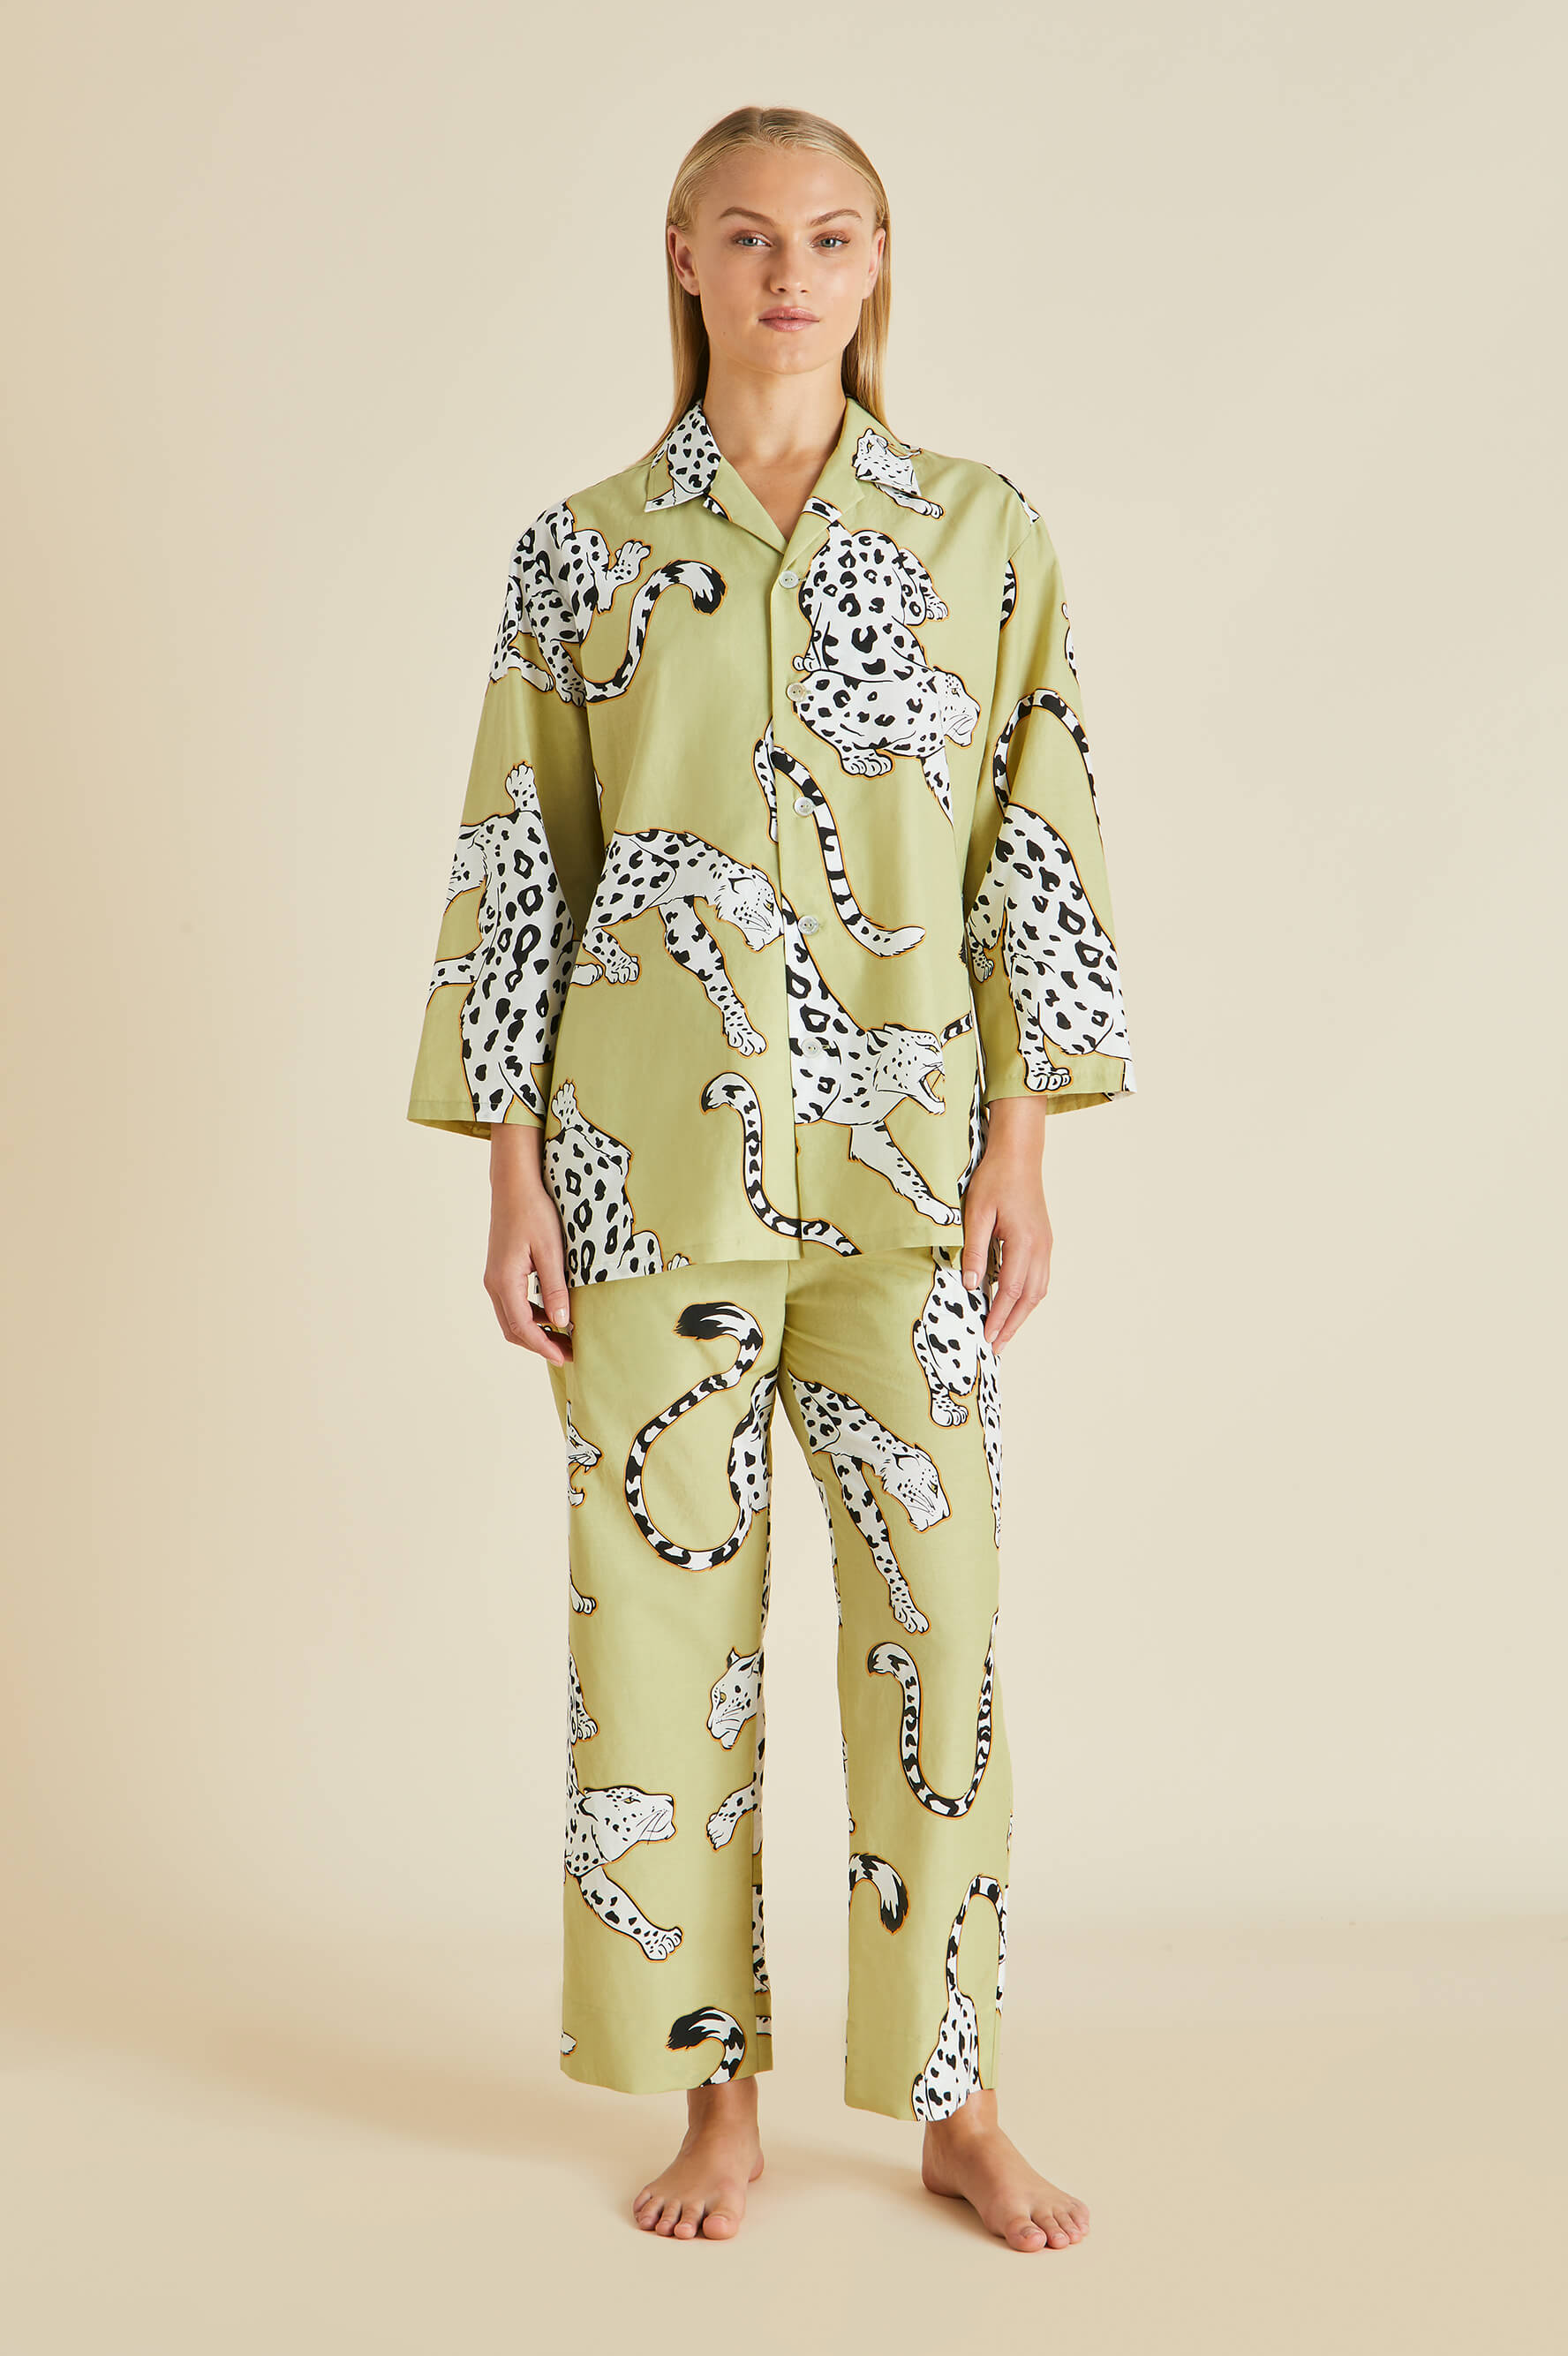 Luxe Pima Evergreen Pajama Set